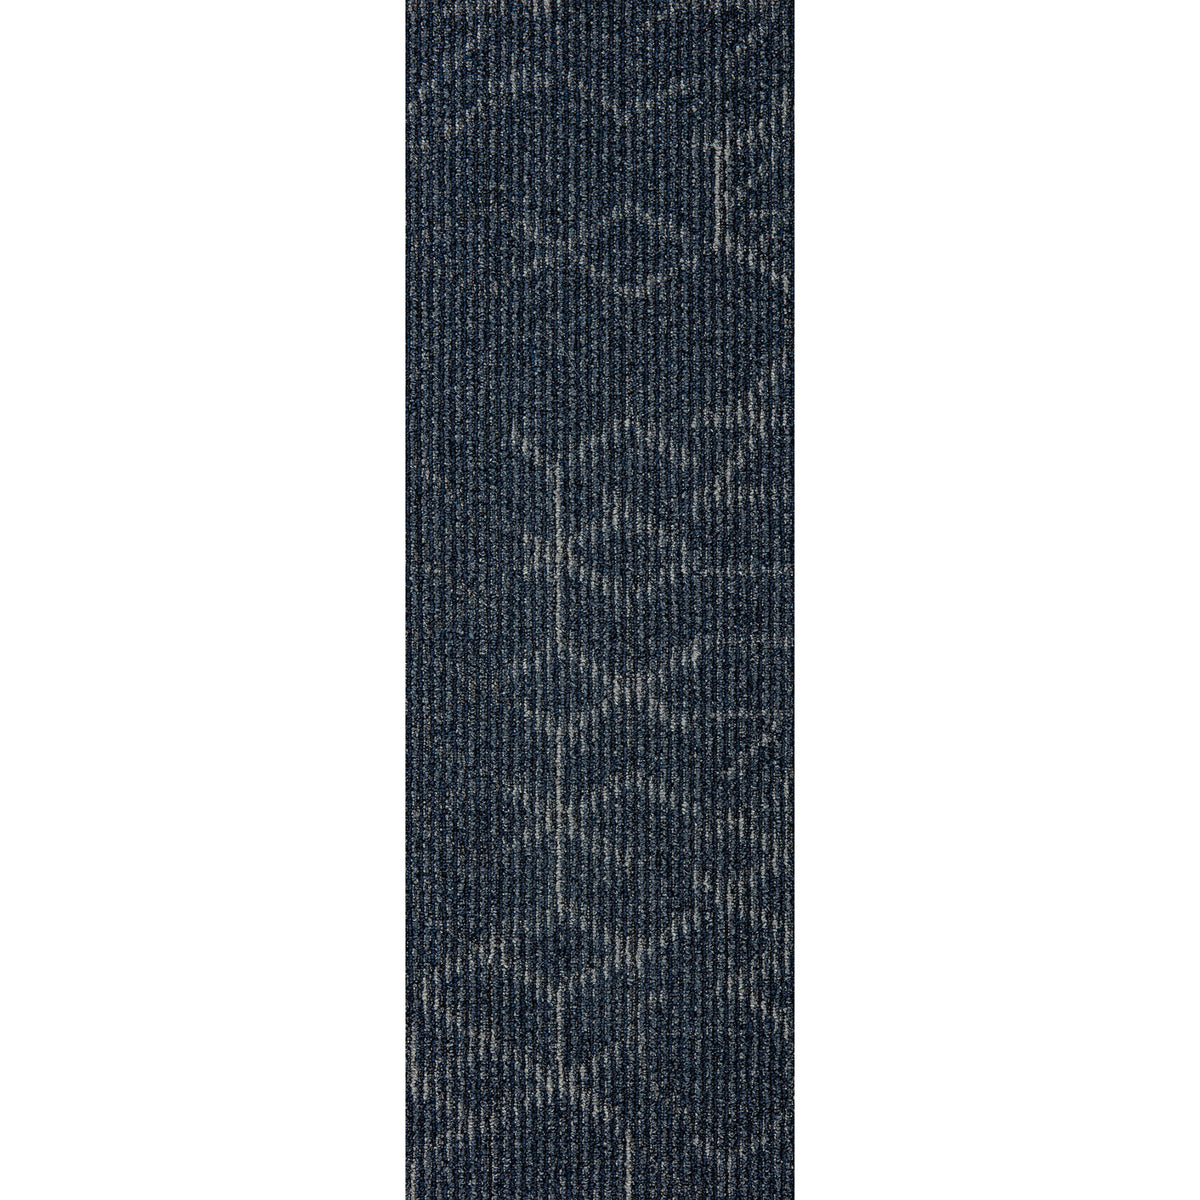 Mohawk Group - Visual Edge Angled Perception Carpet Tile - Indigo Ink